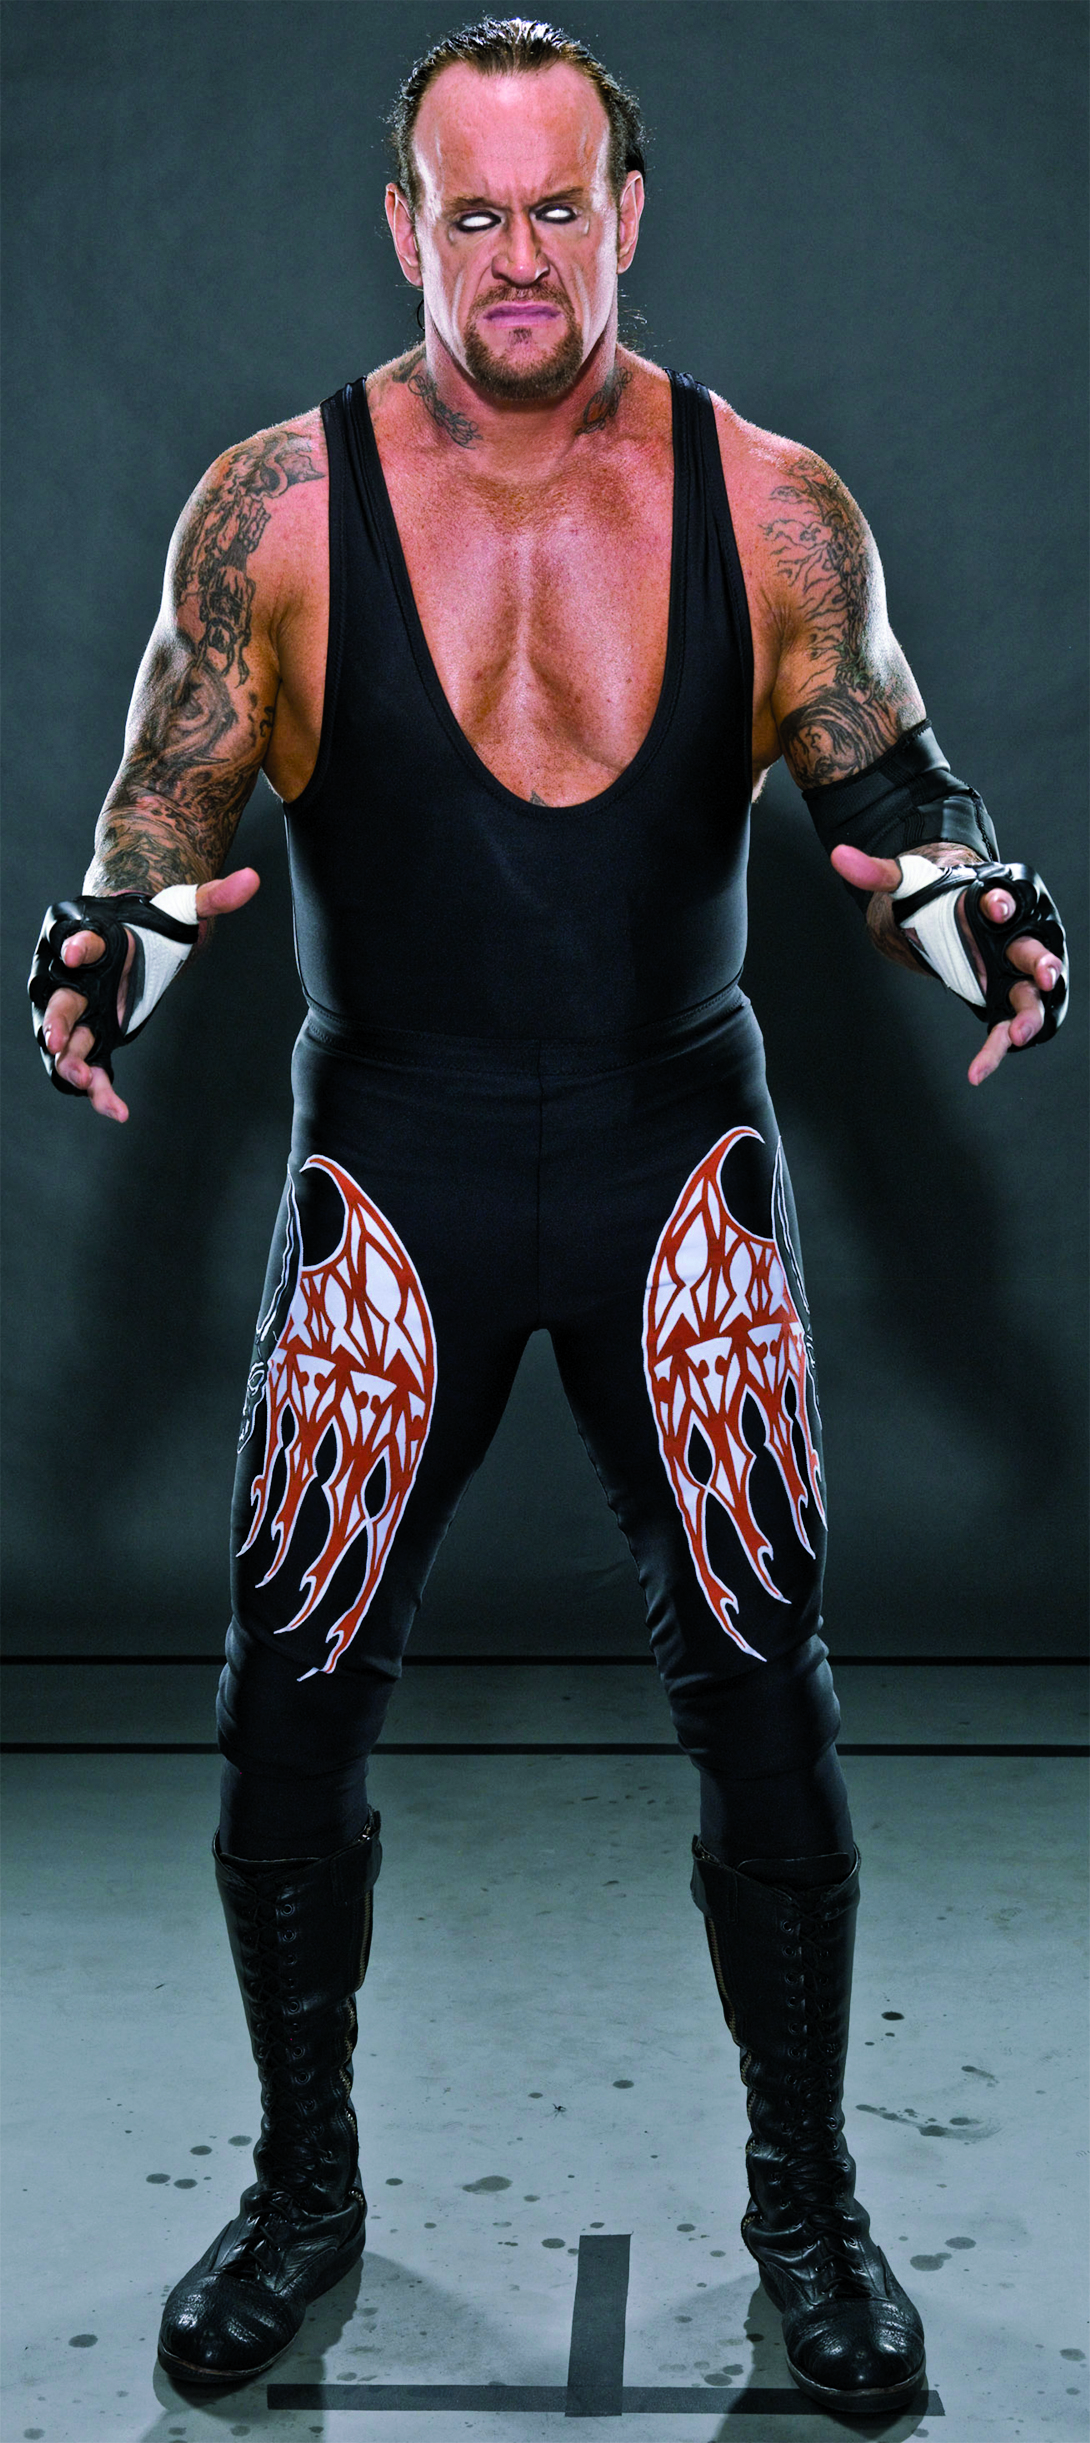 Image Undertaker Pose Wwe Pro Wrestling Wiki Divas Knockouts Results Match